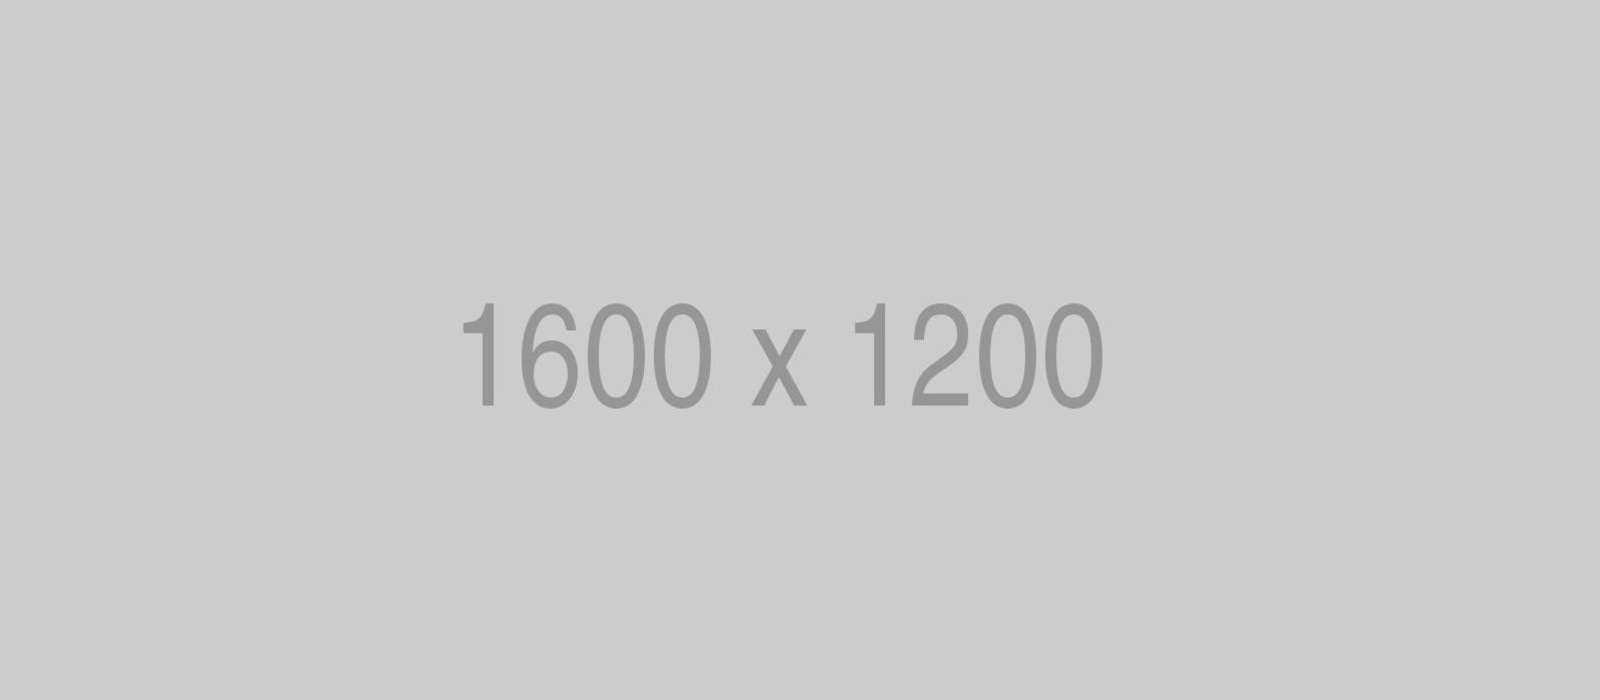 Testbild Alternative 1600x1200 jpg